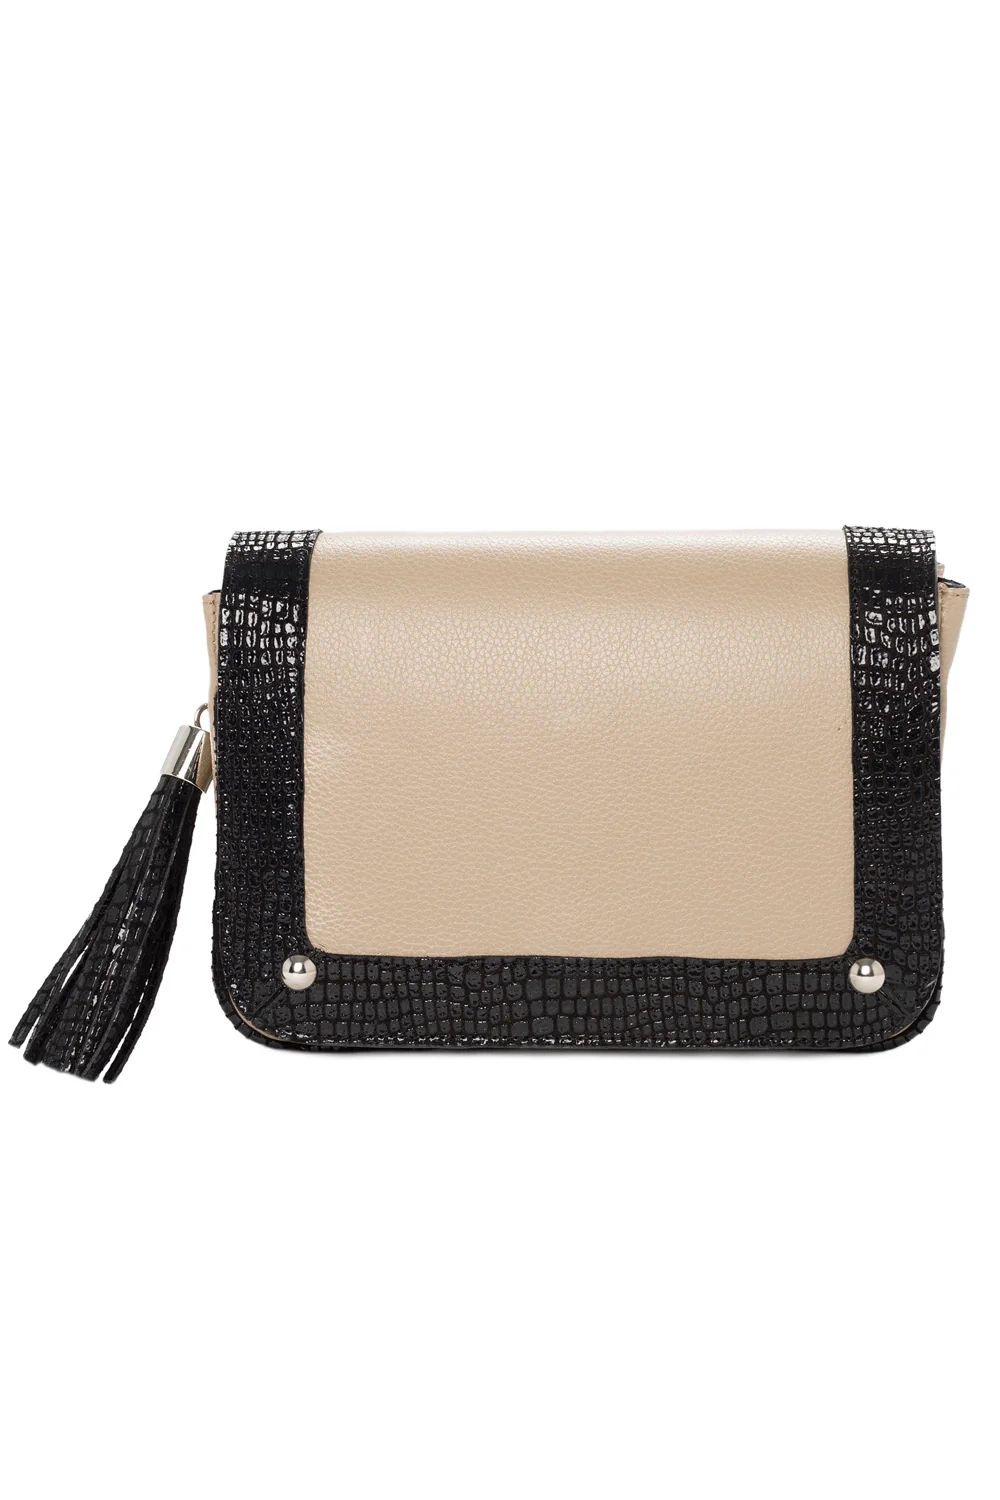 'Amber' Black And Taupe Leather Mini Shoulder Bag | Mel Boteri